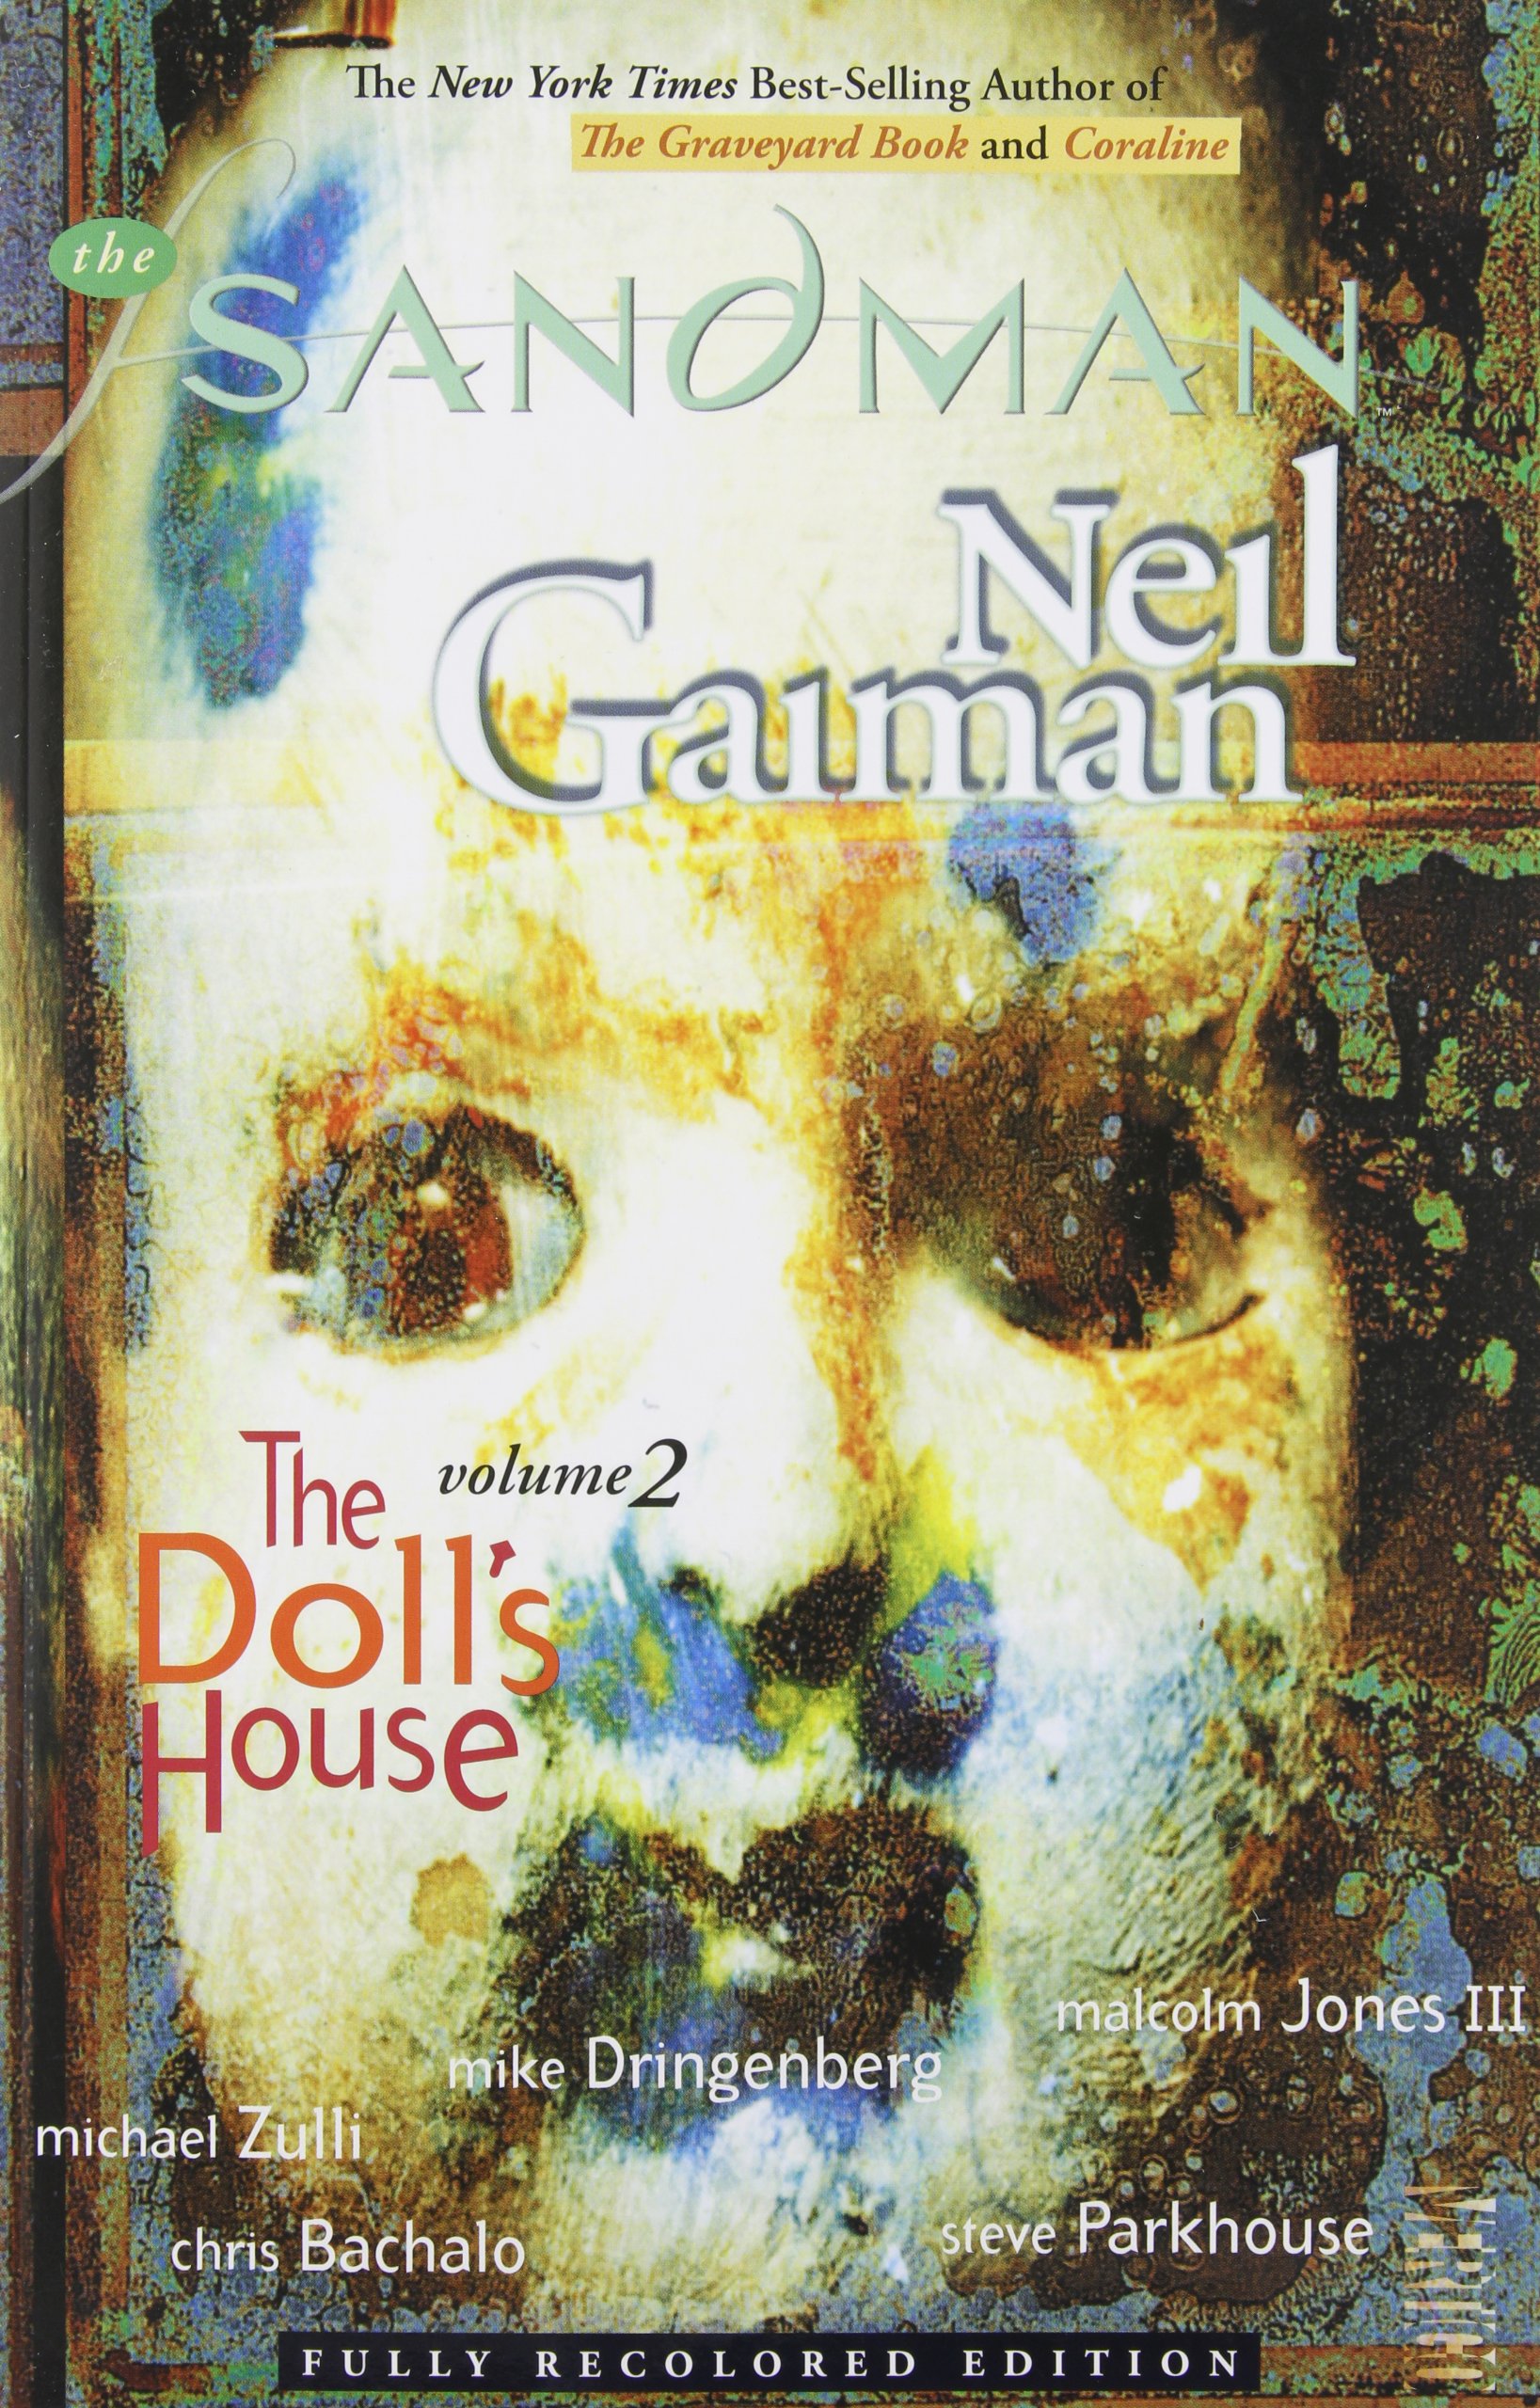 The Sandman Vol. 10 by Neil Gaiman